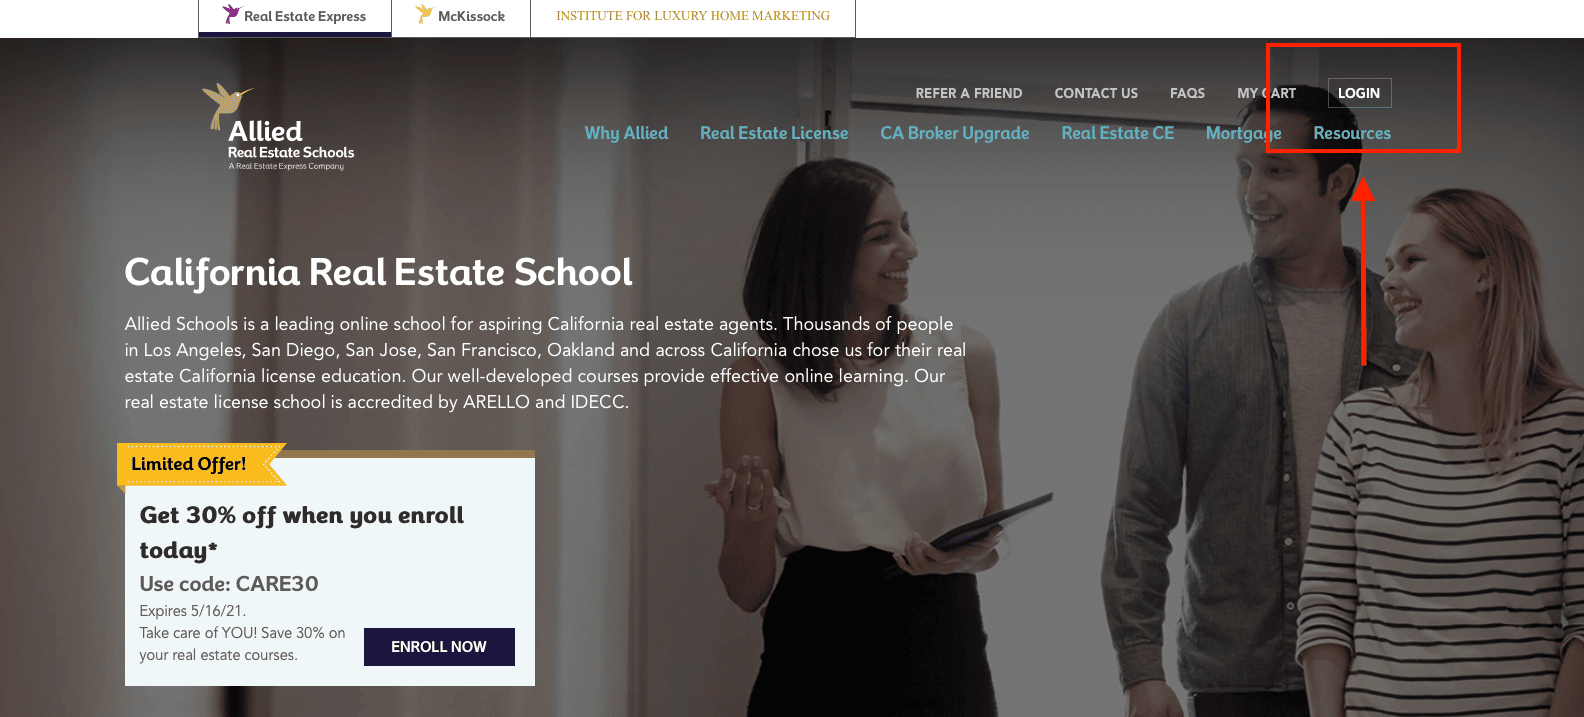 Allied Real Estate Schools Login link in homepage